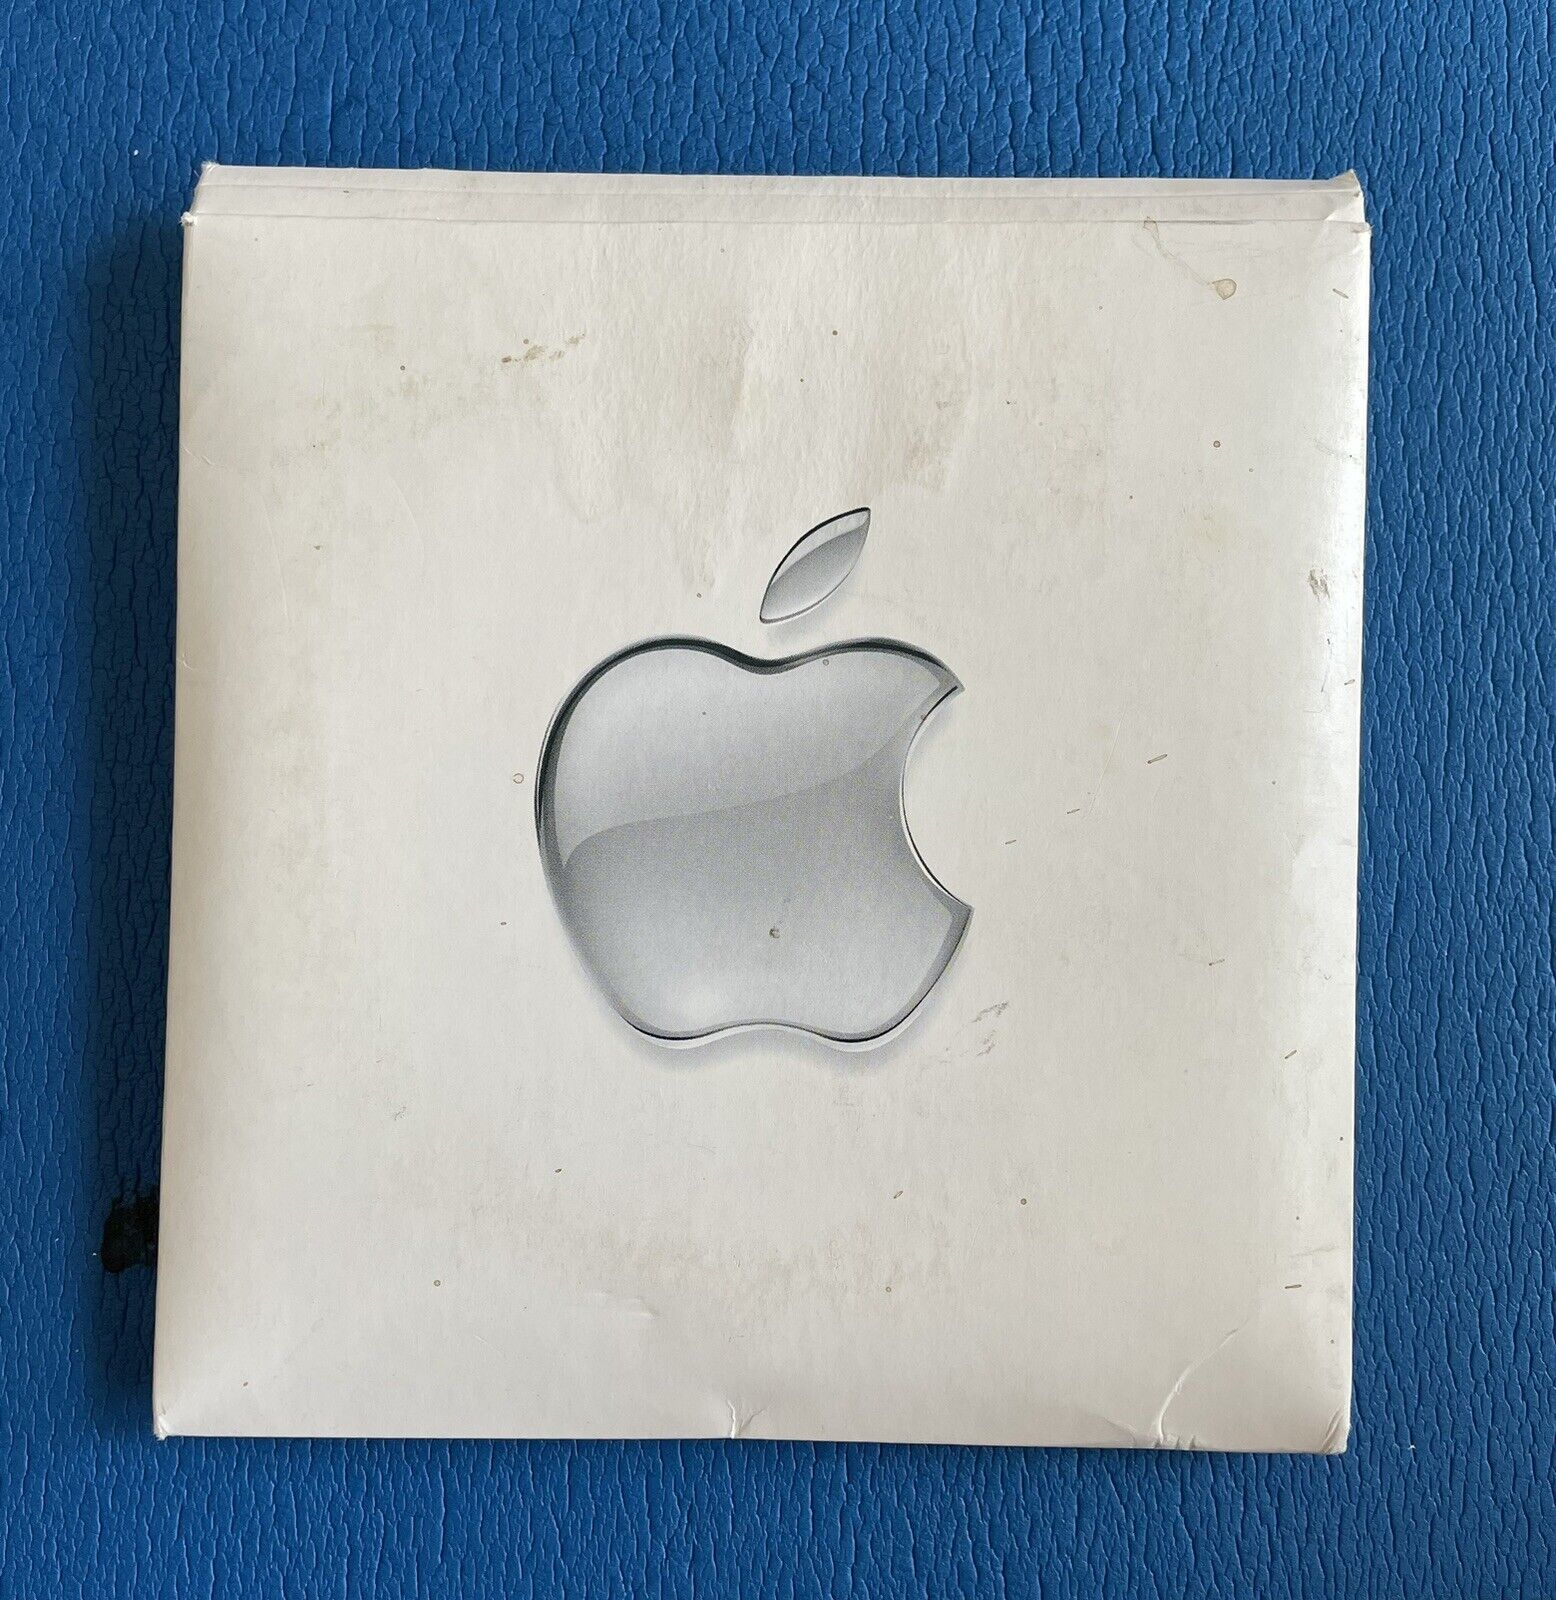 Rare Vintage Apple iBook G4 Install Media P/N: 603-4455-A